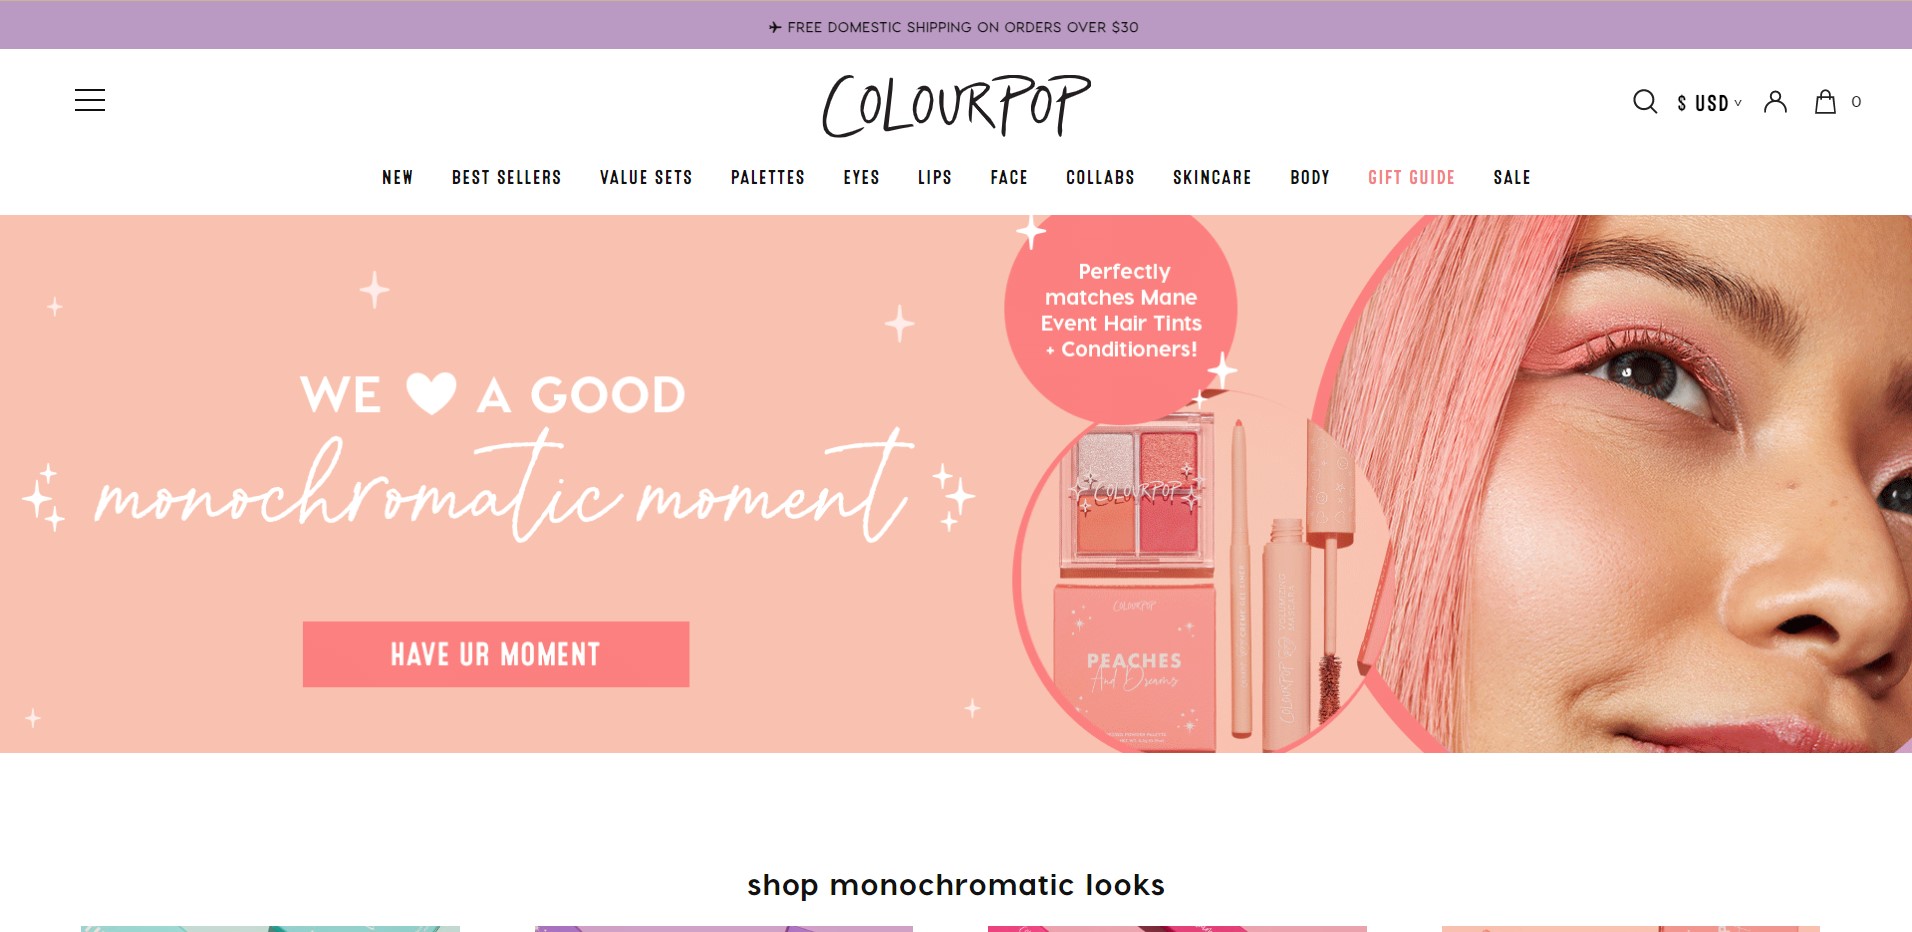 Shopify beauty stores: ColorPop